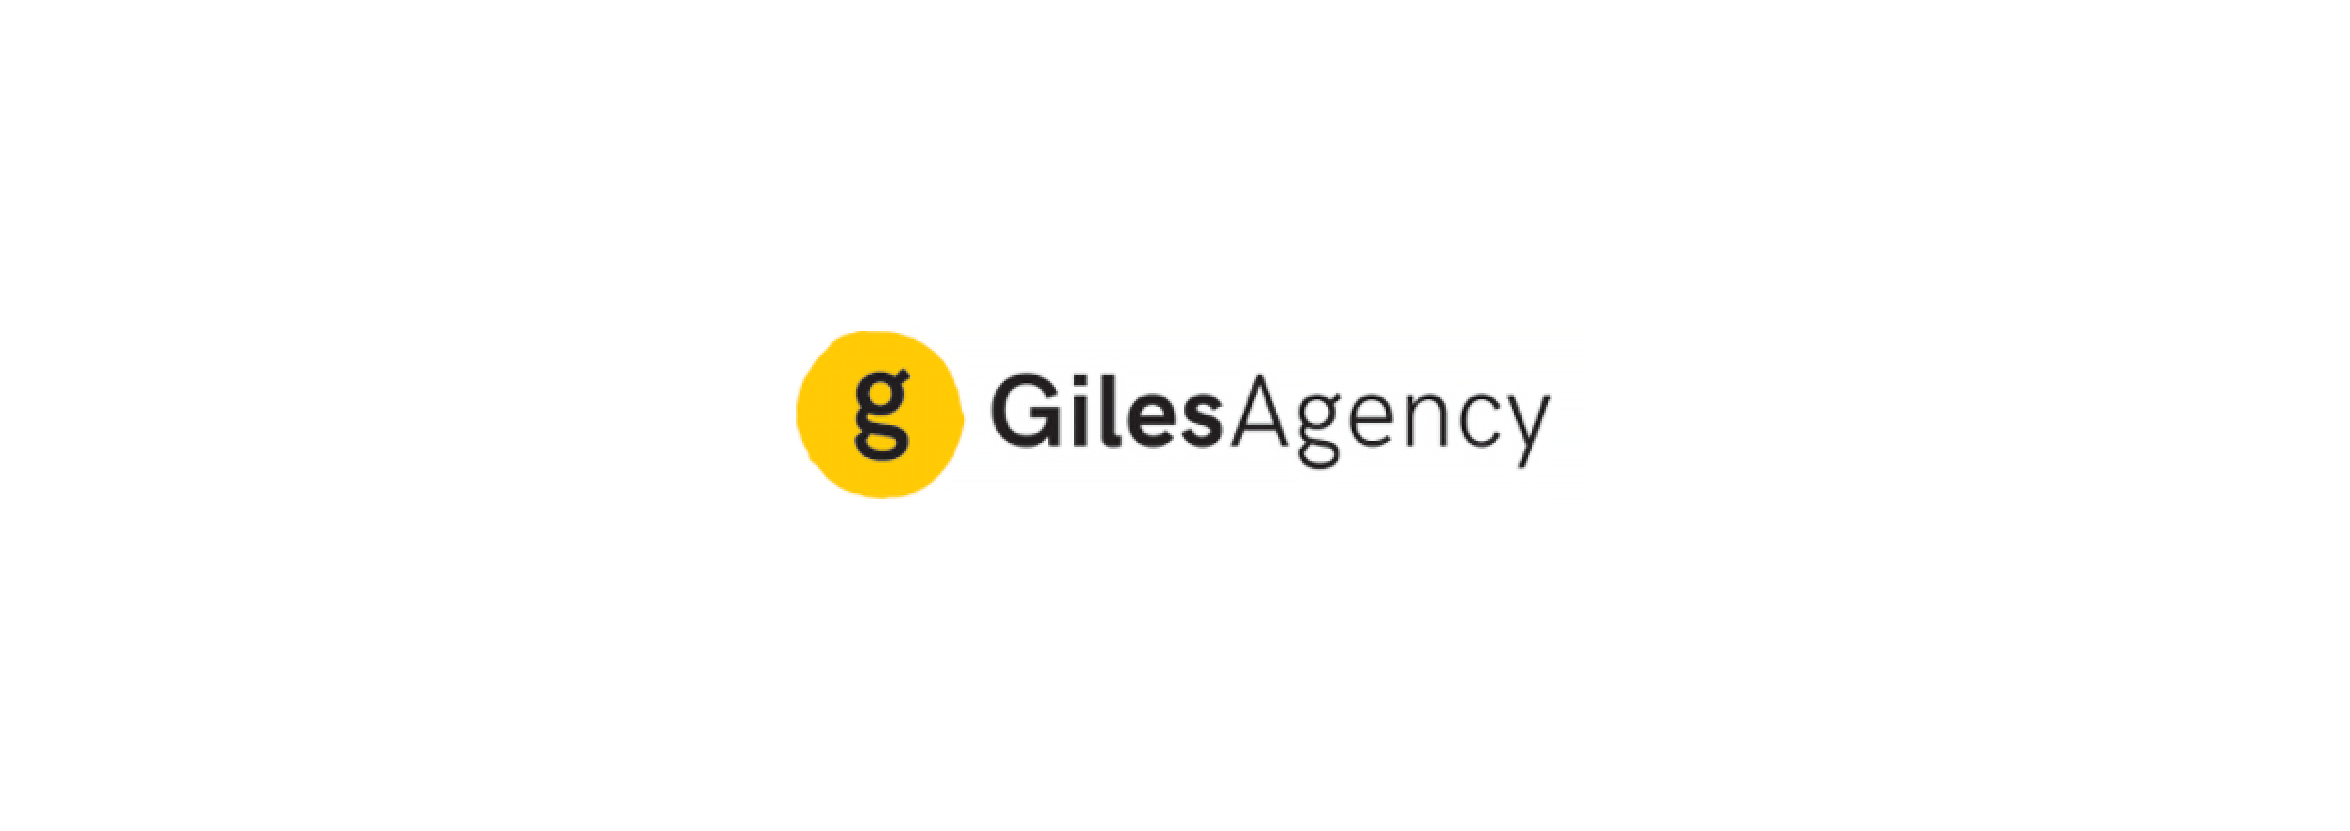  Logo for Giles Agency.